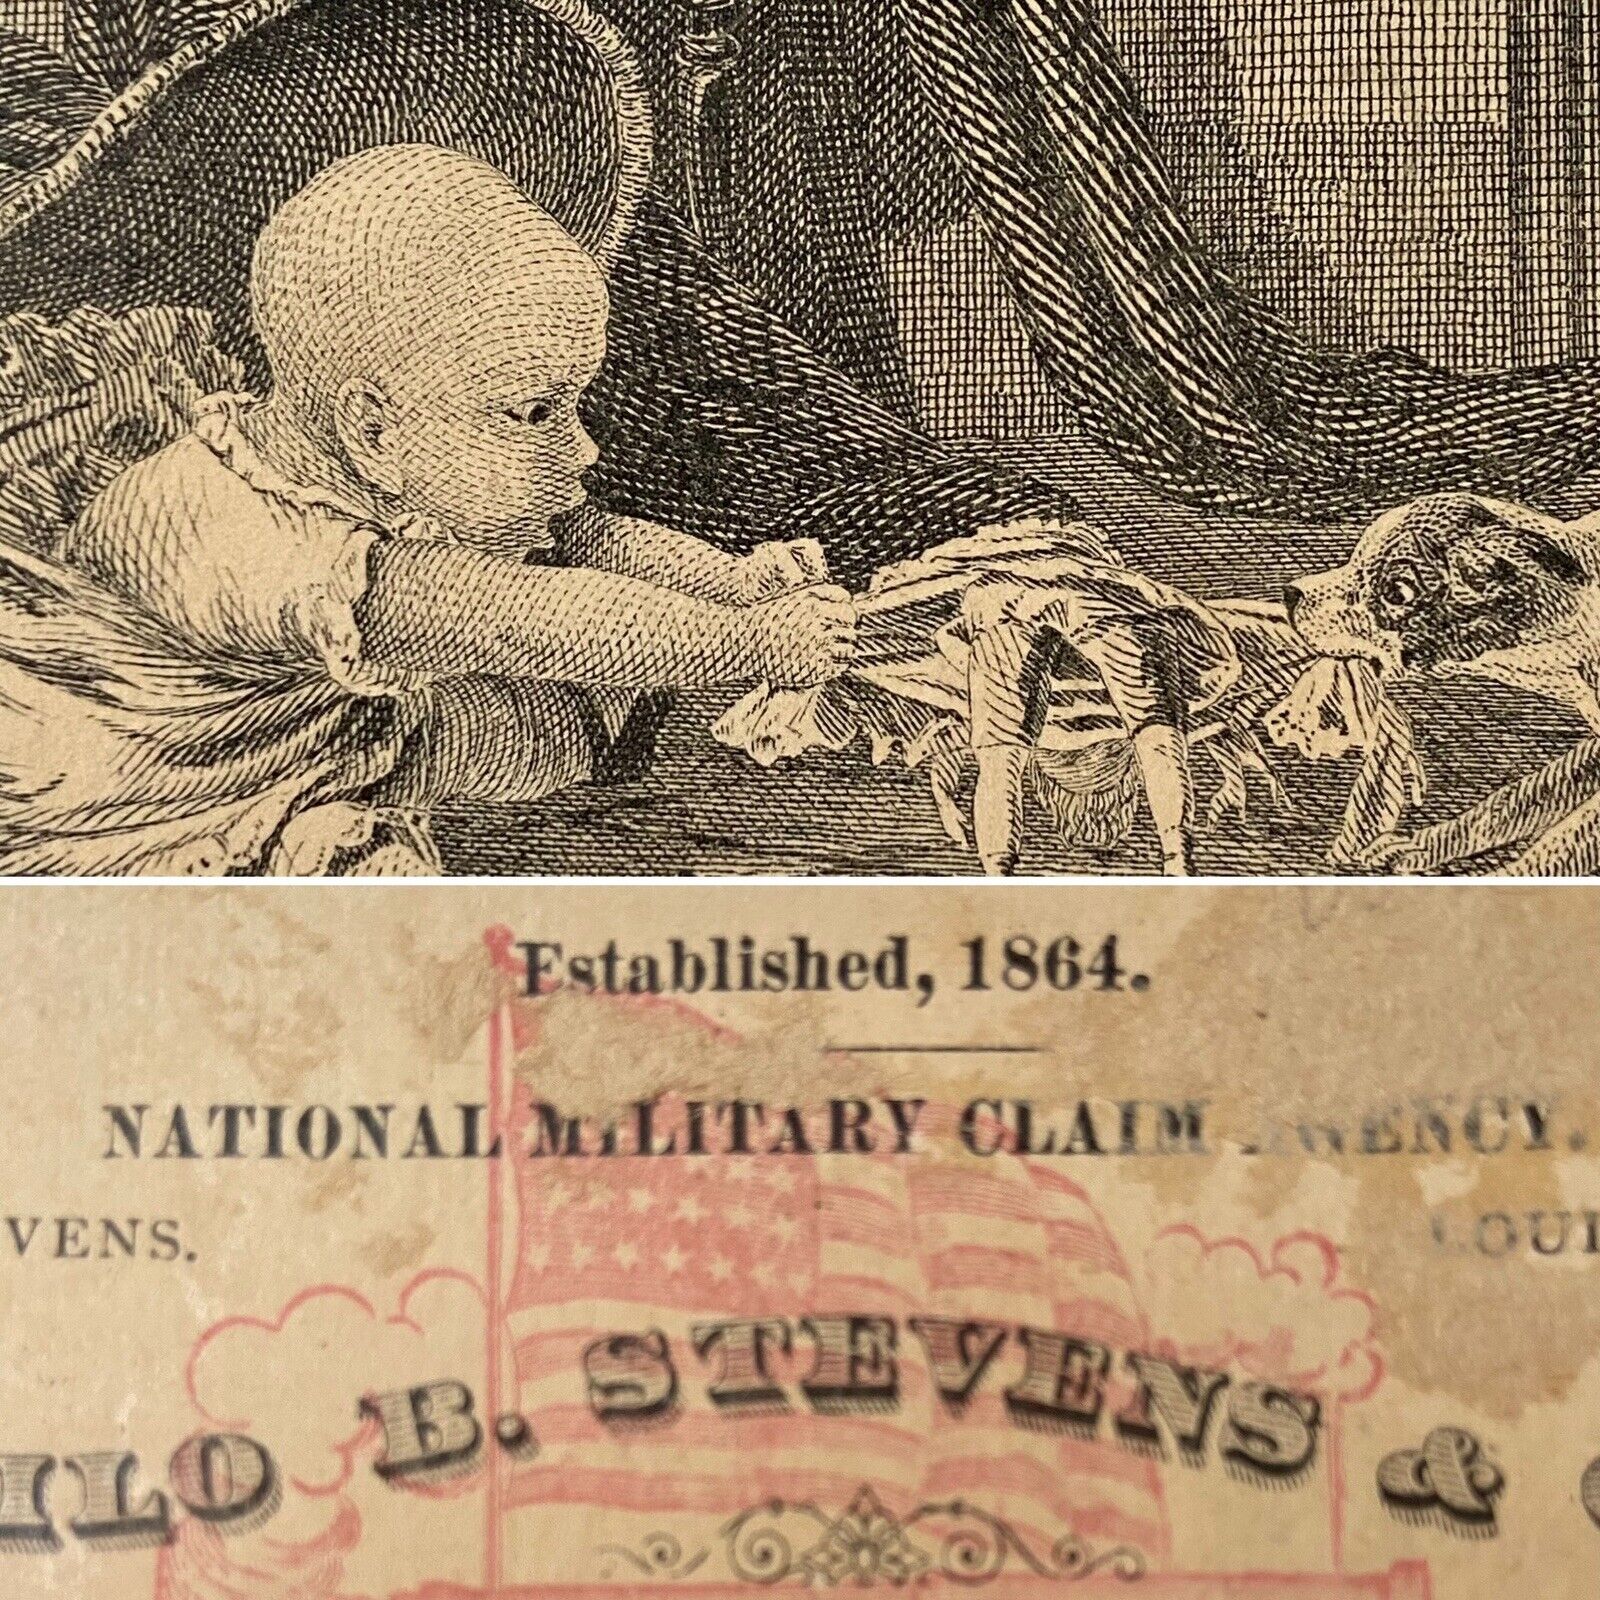 1880s Civil War National Military Claim Agency Trade Card Milo B. Stevens & Co.